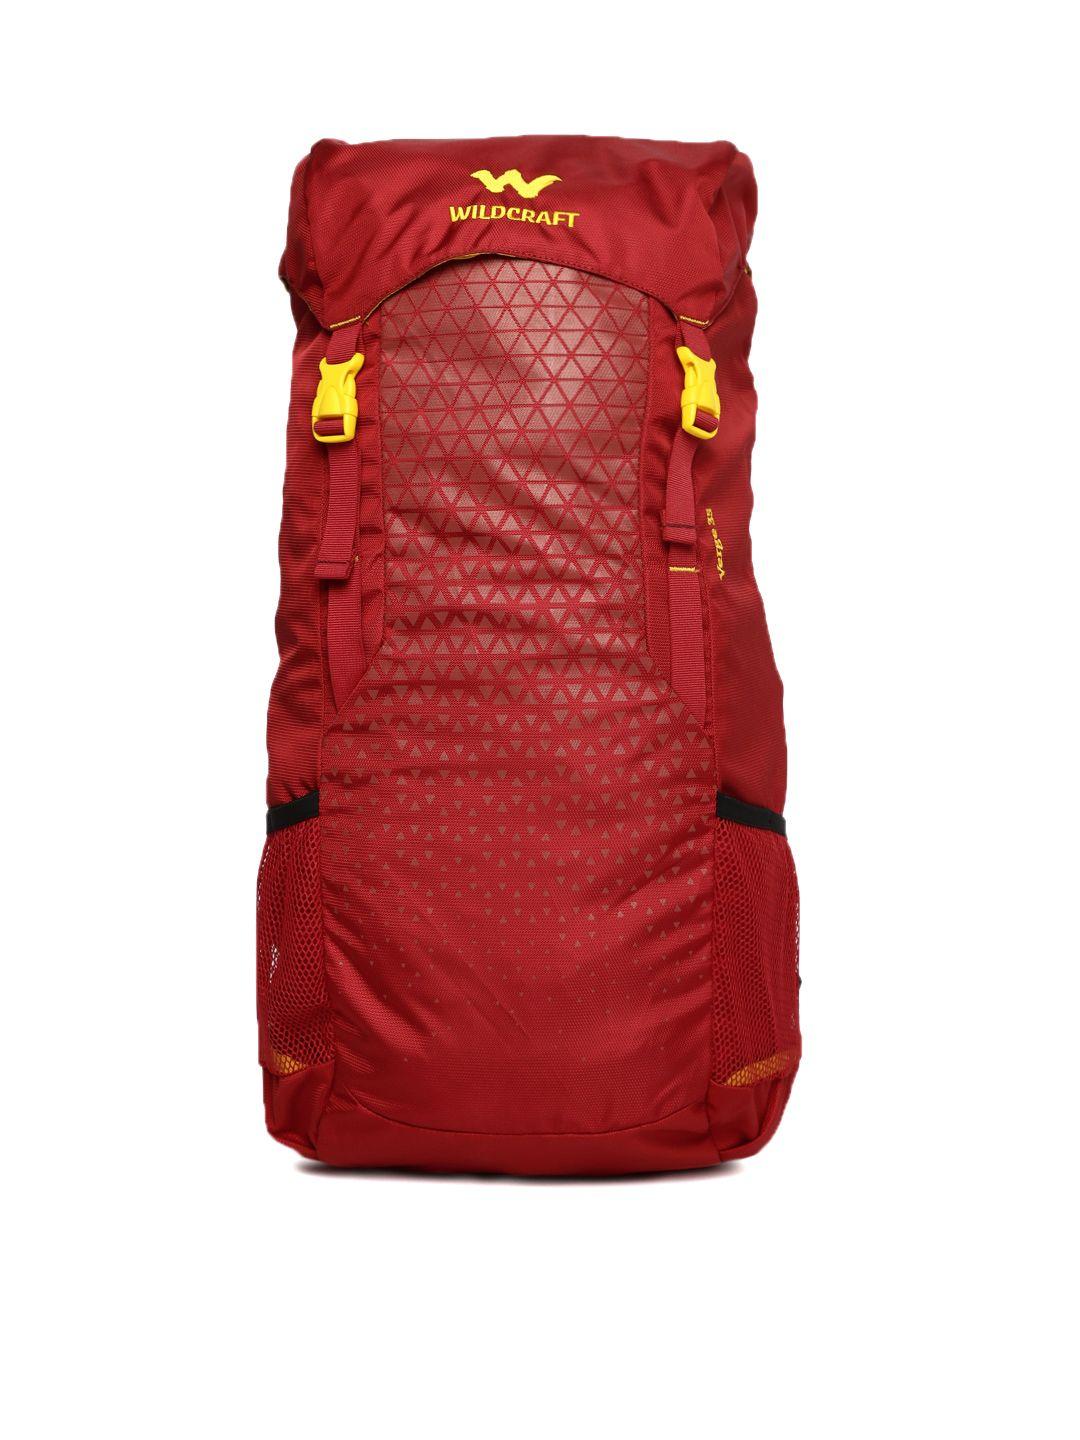 wildcraft-unisex-red-verge-35-printed-rucksack